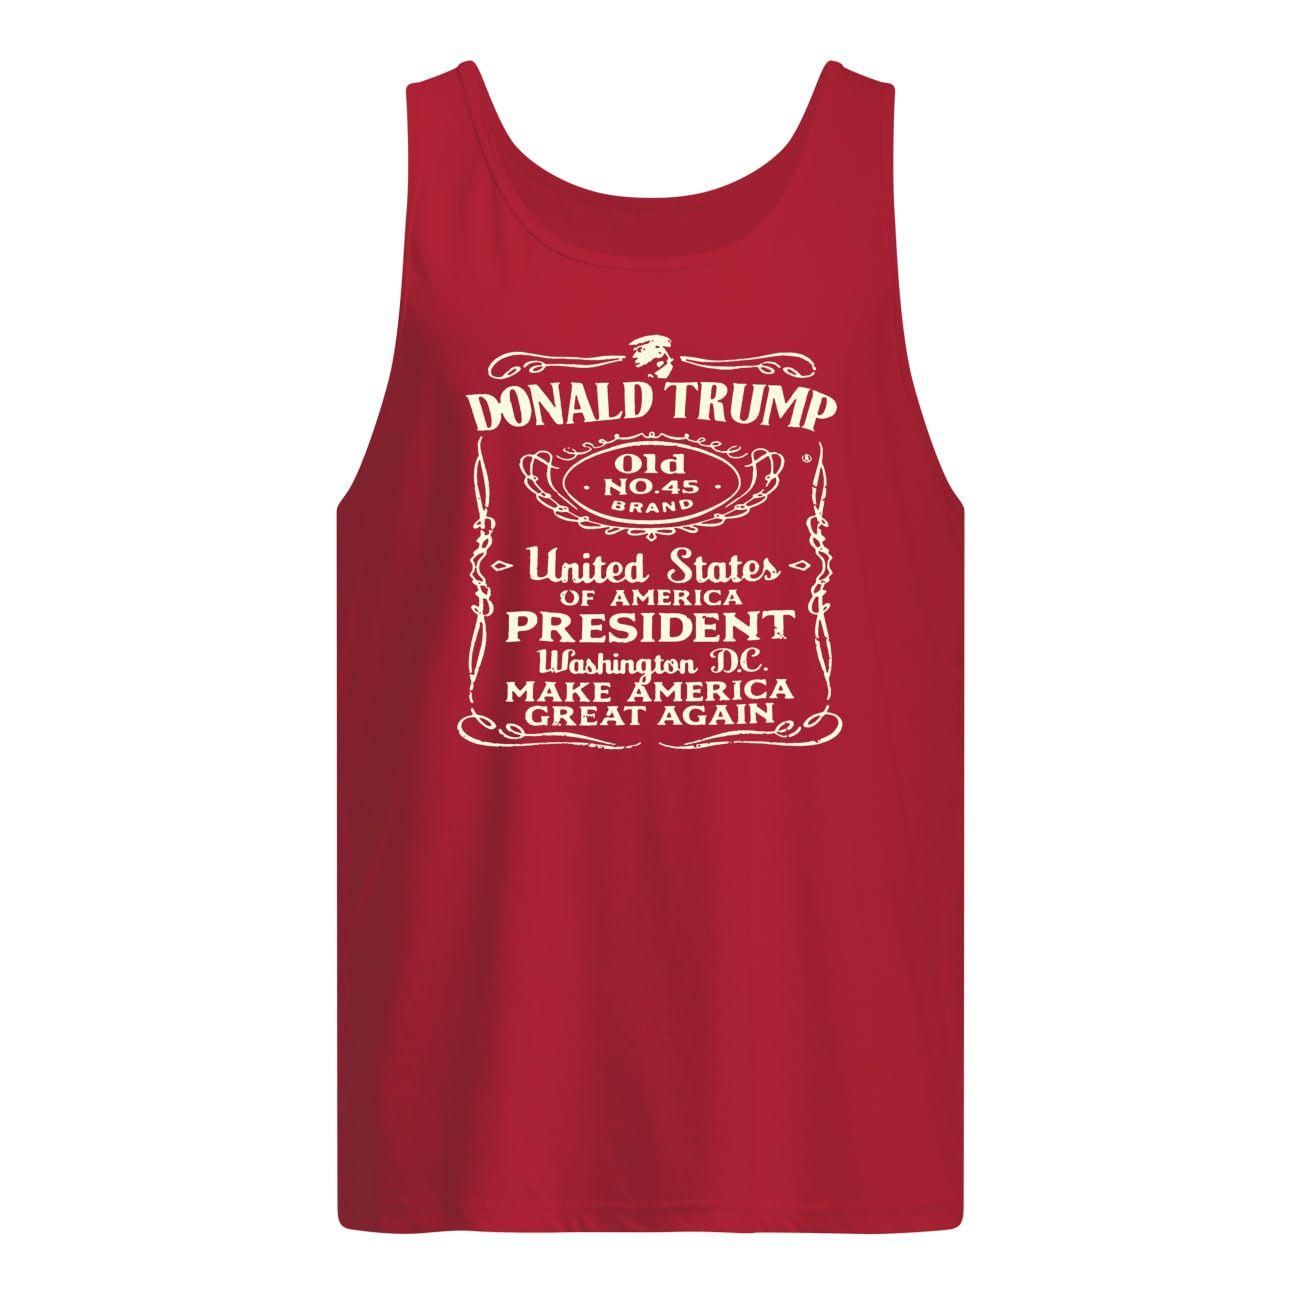 19051333mofebxh Donald trump old no 45 brand united states of america president washington DC make america great again shirt Men's Tank Top